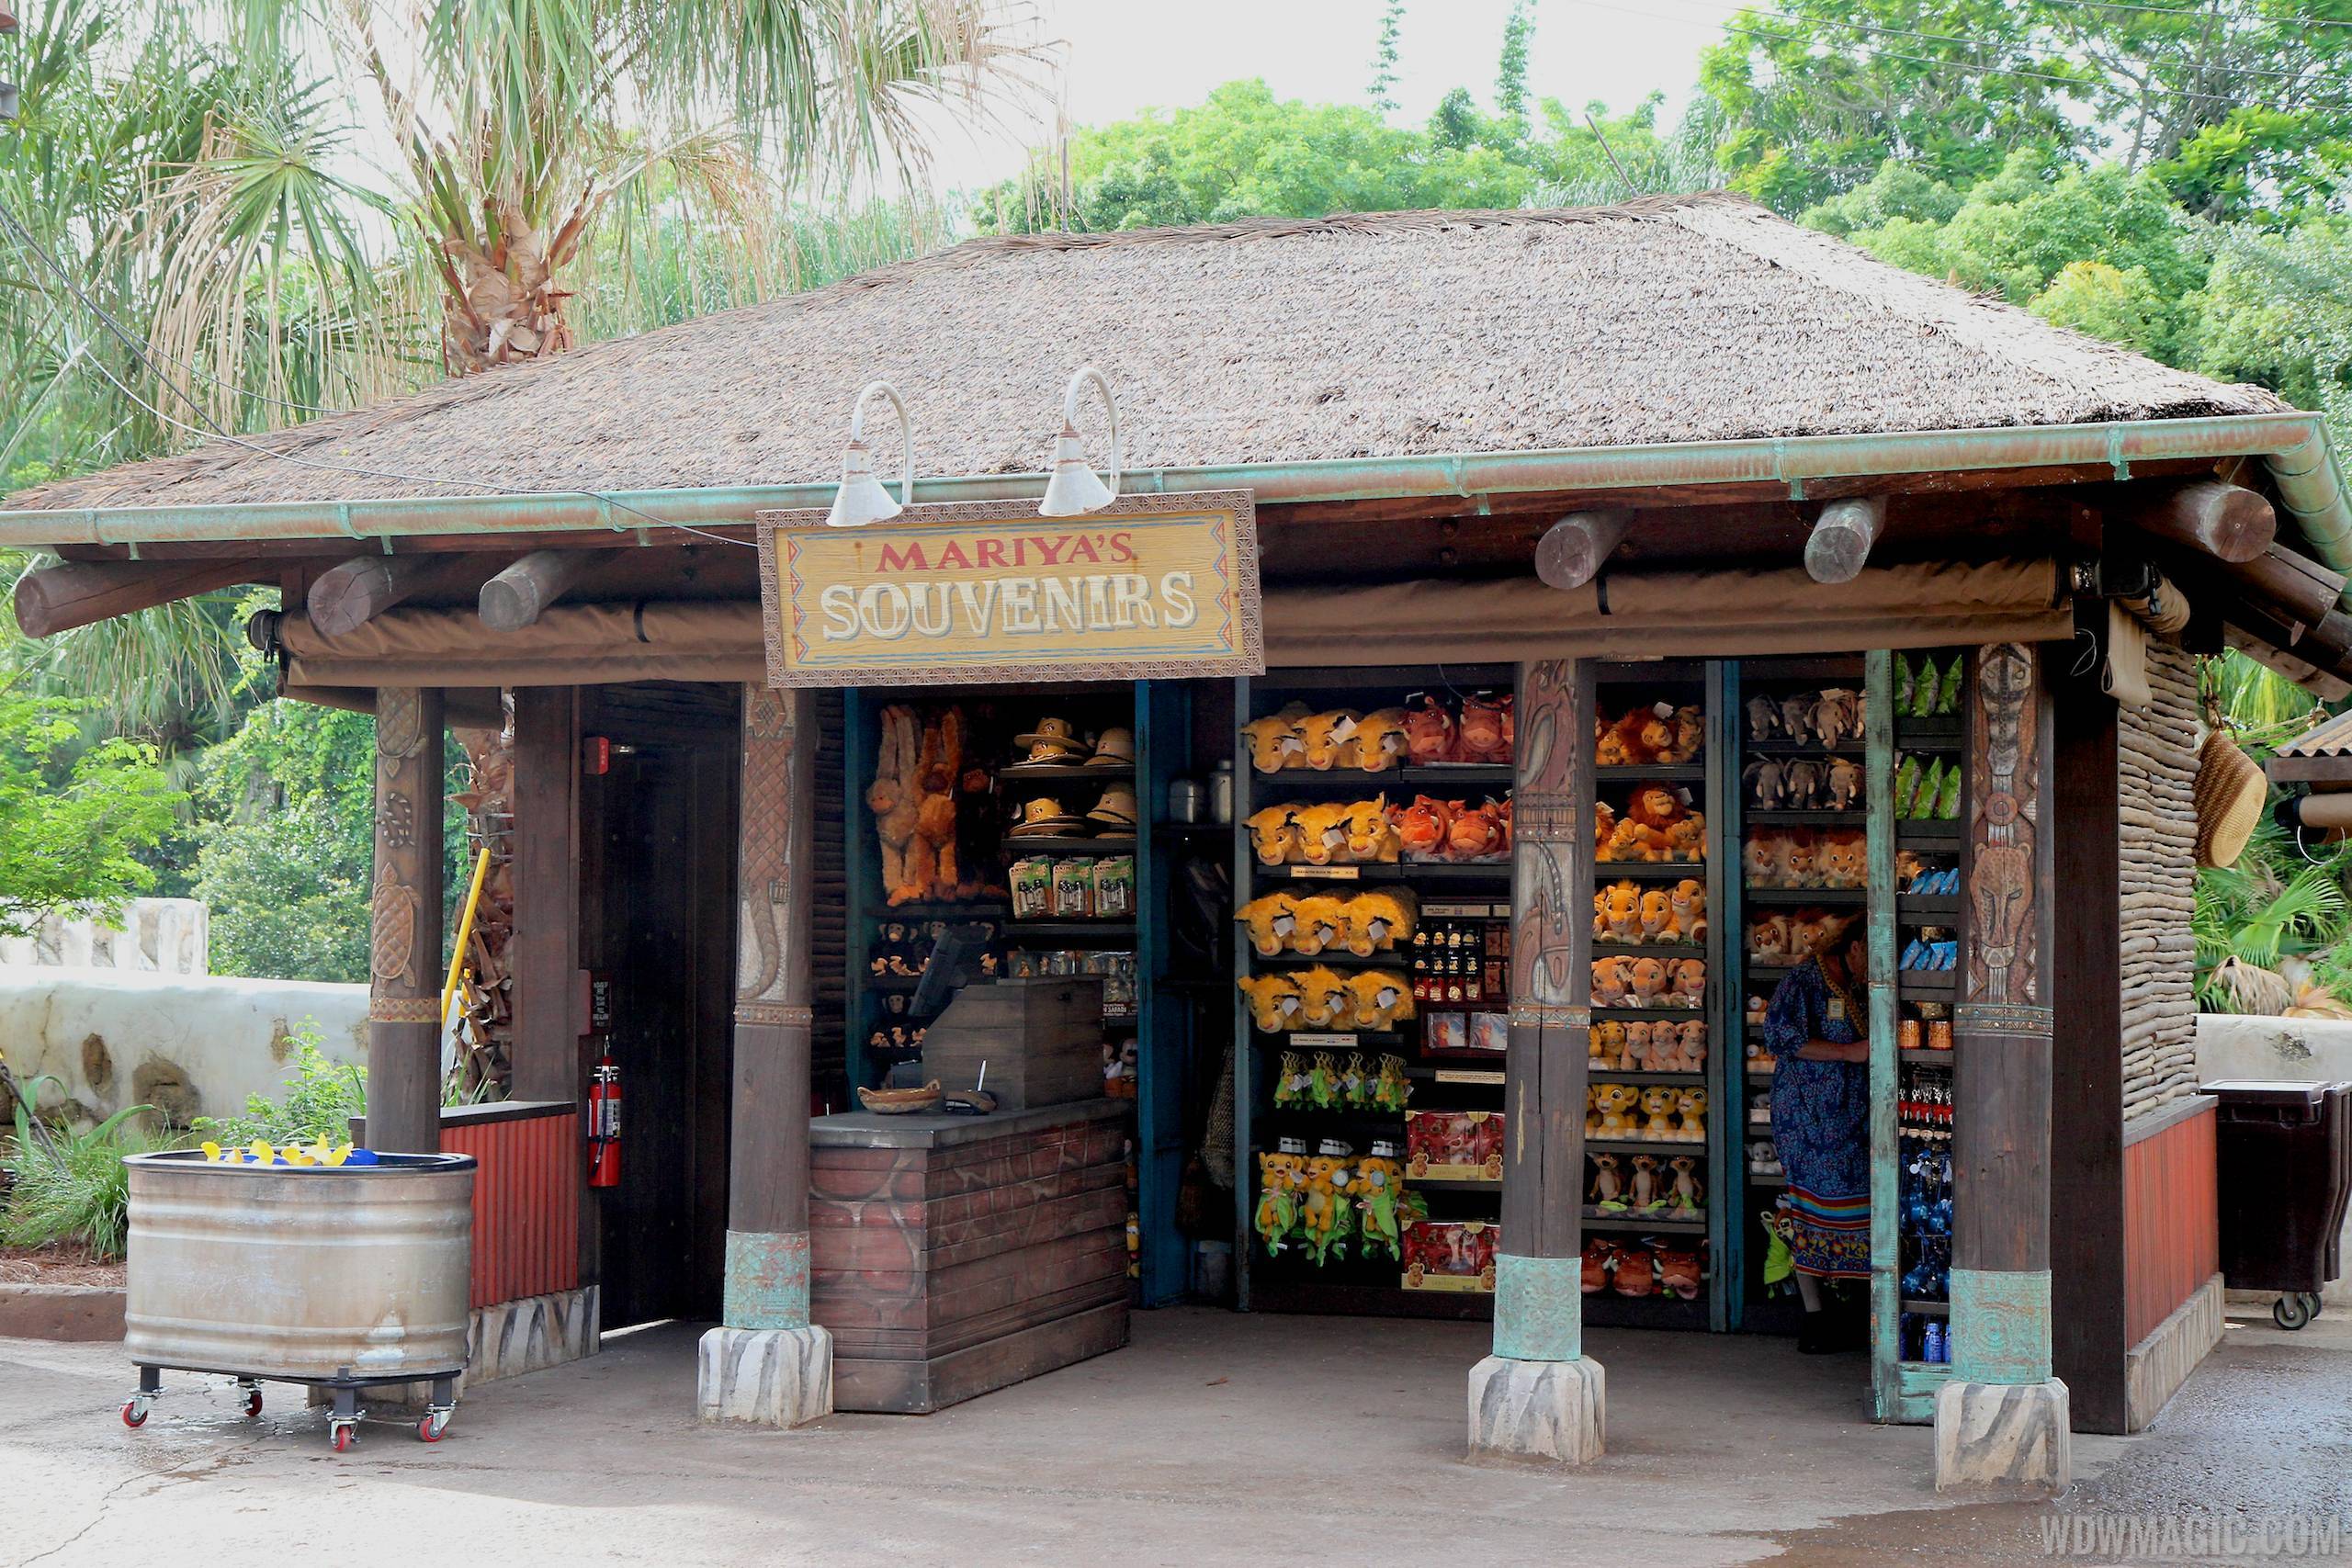 New Harambe Theatre area in Africa - Mariya's Souvenirs merchandise kiosk